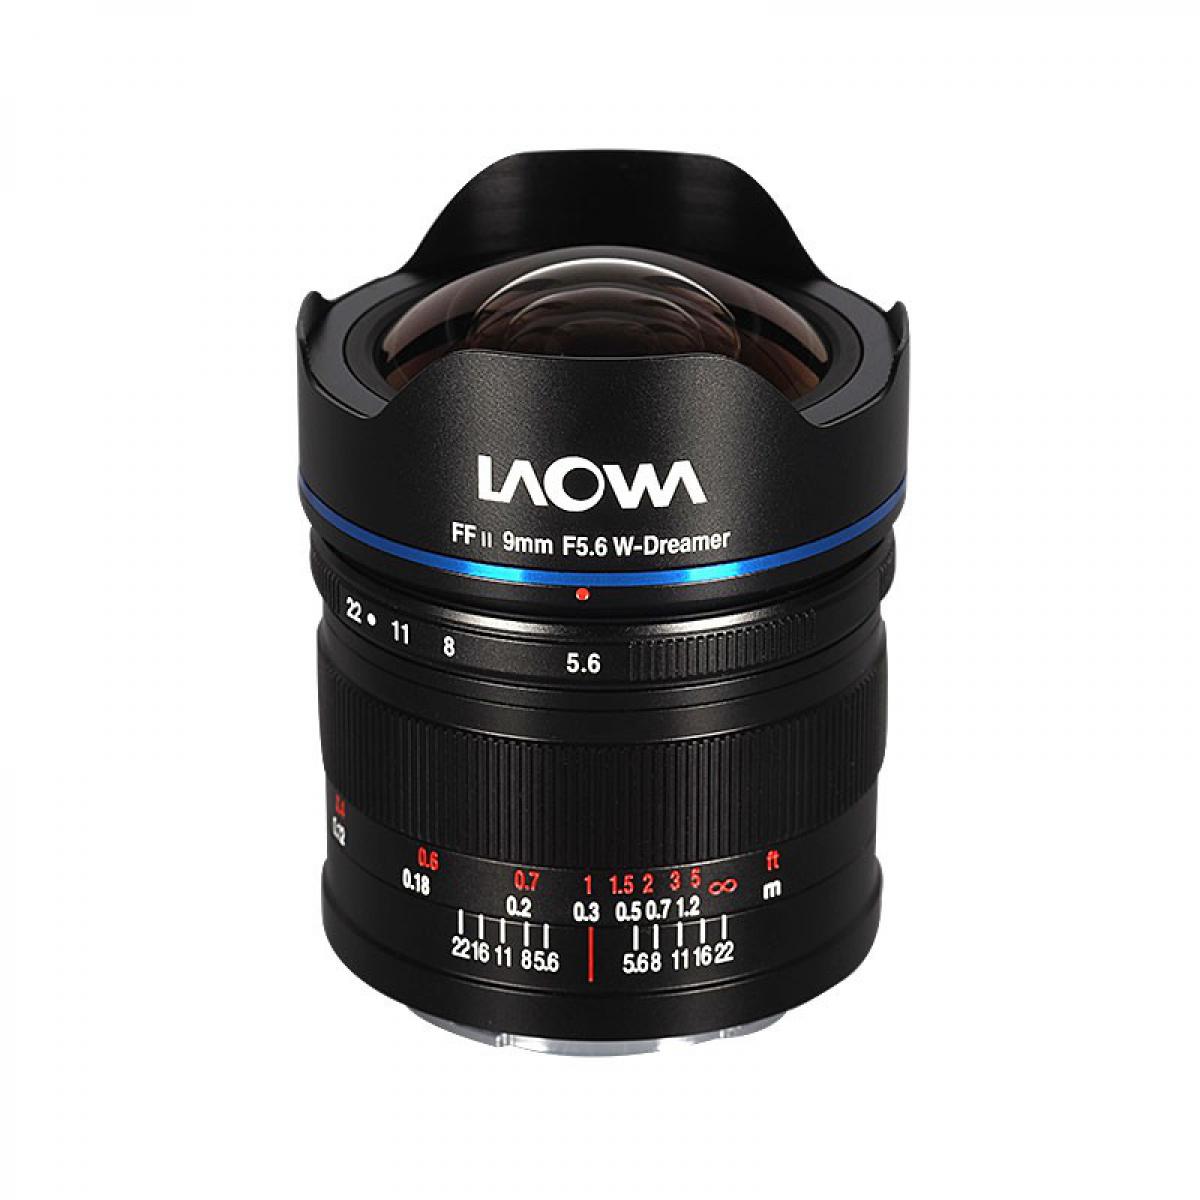 Tokina - LAOWA Objectif 9mm f/5.6 FF RL noir compatible avec Sony E - Objectif Photo